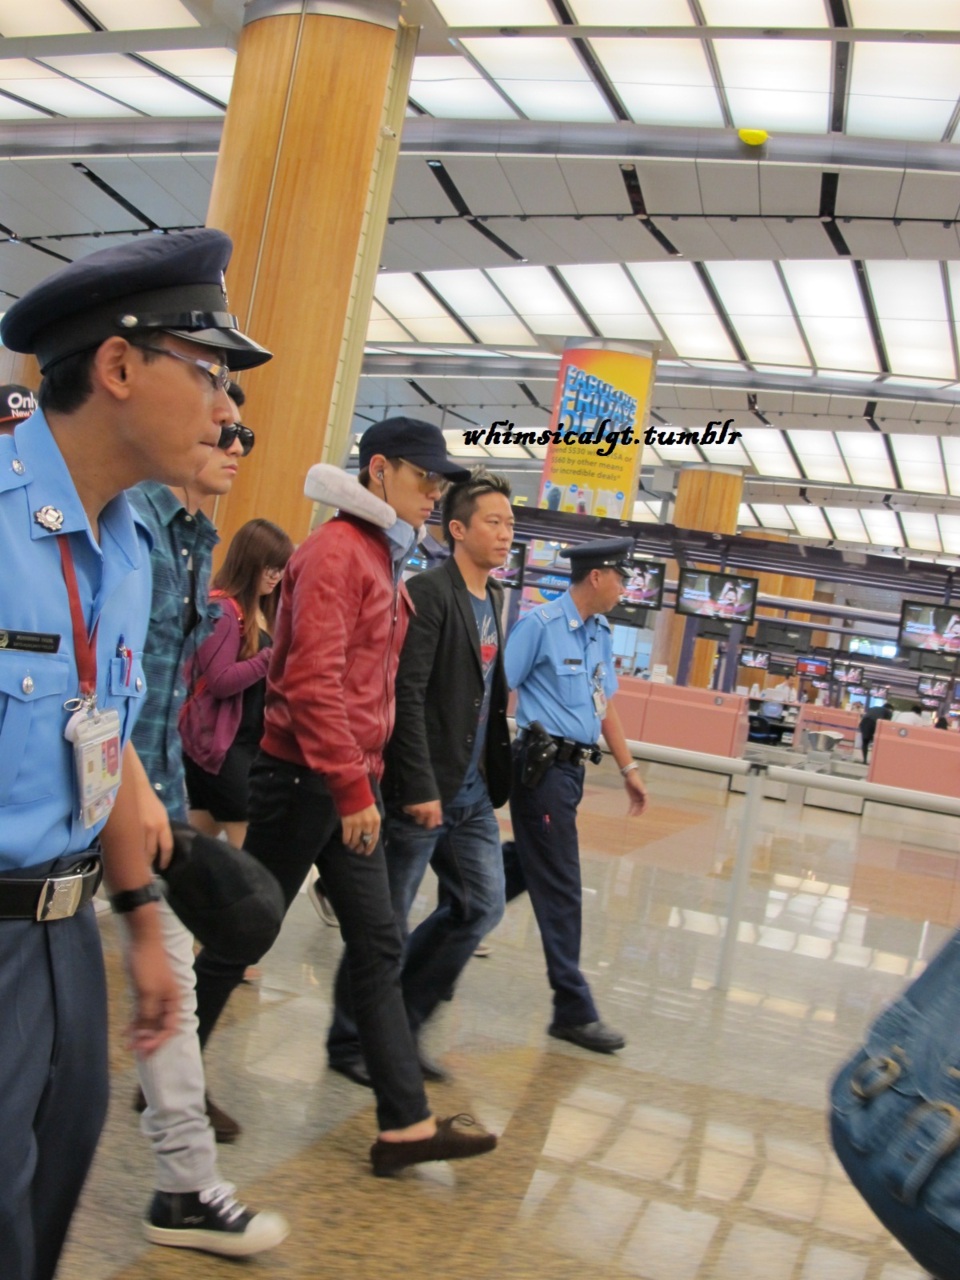 pics - [Vid/Pics] GD&TOP y Seungri dejando Singapur a Malaysia SEUNGRI+GD+TOP+MALAYSIA+bigbangupdates.com+4